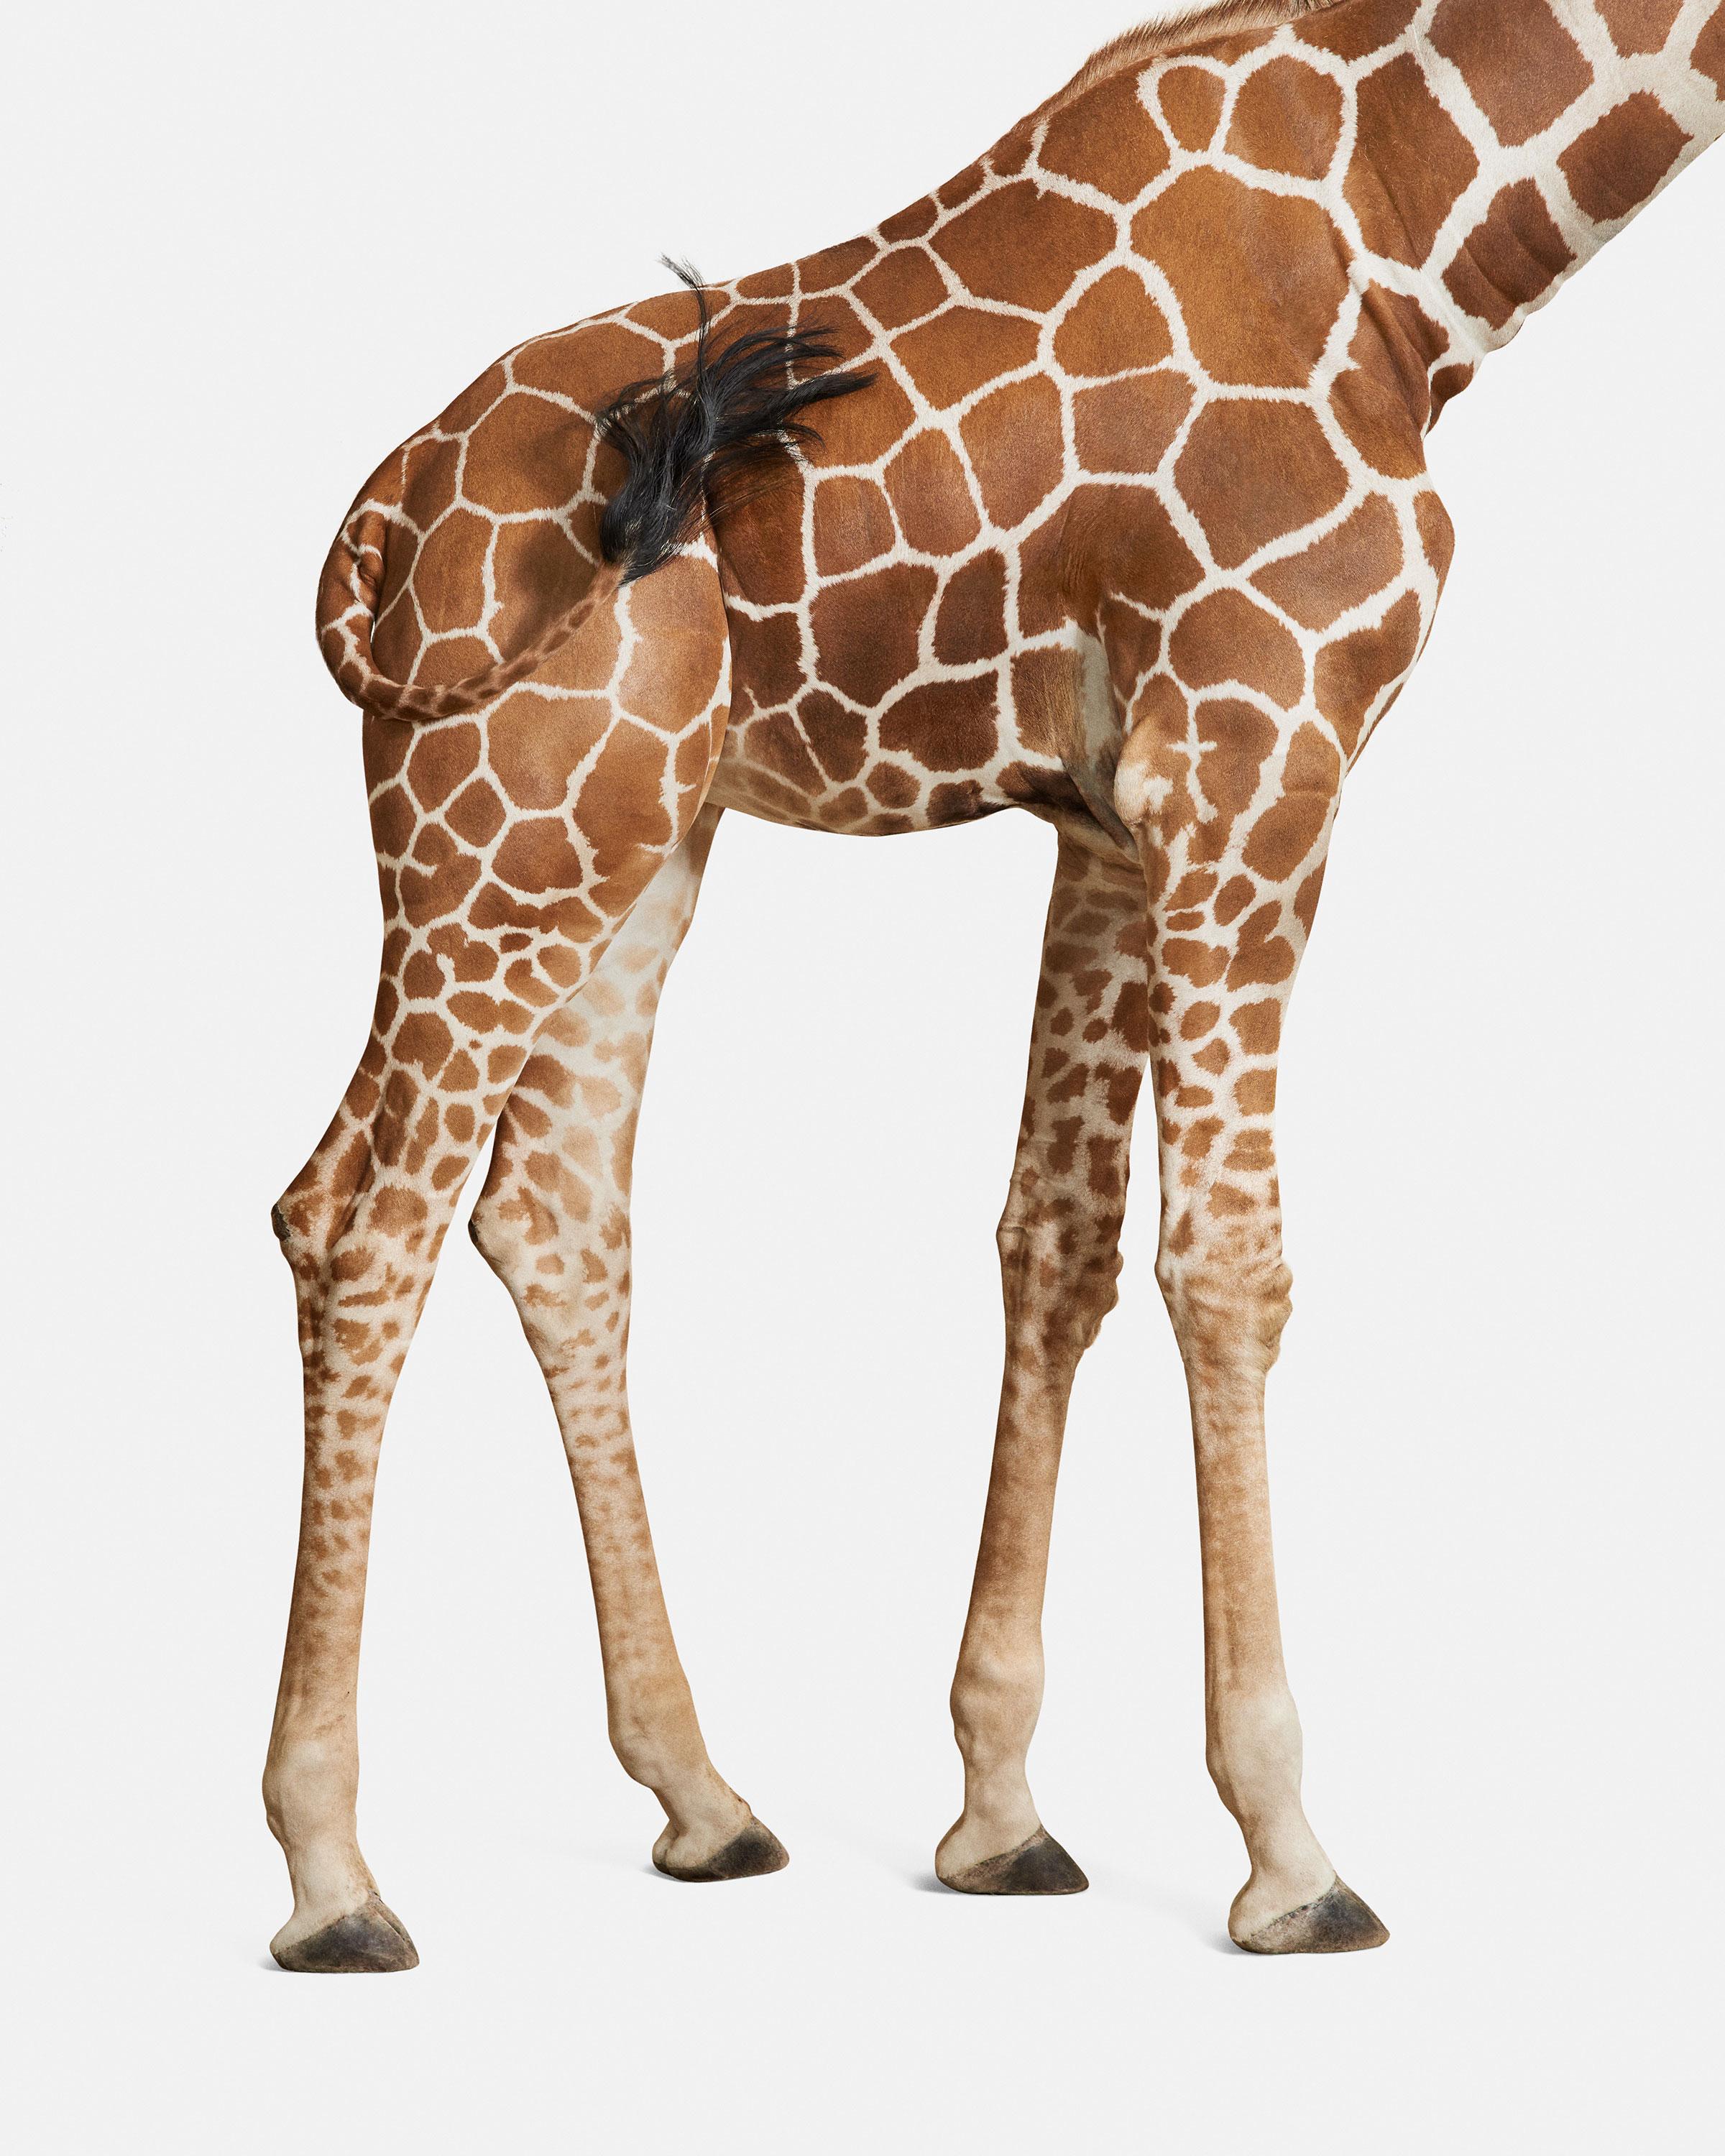 Randal Ford Color Photograph - Giraffe No. 3 (50" x 40")